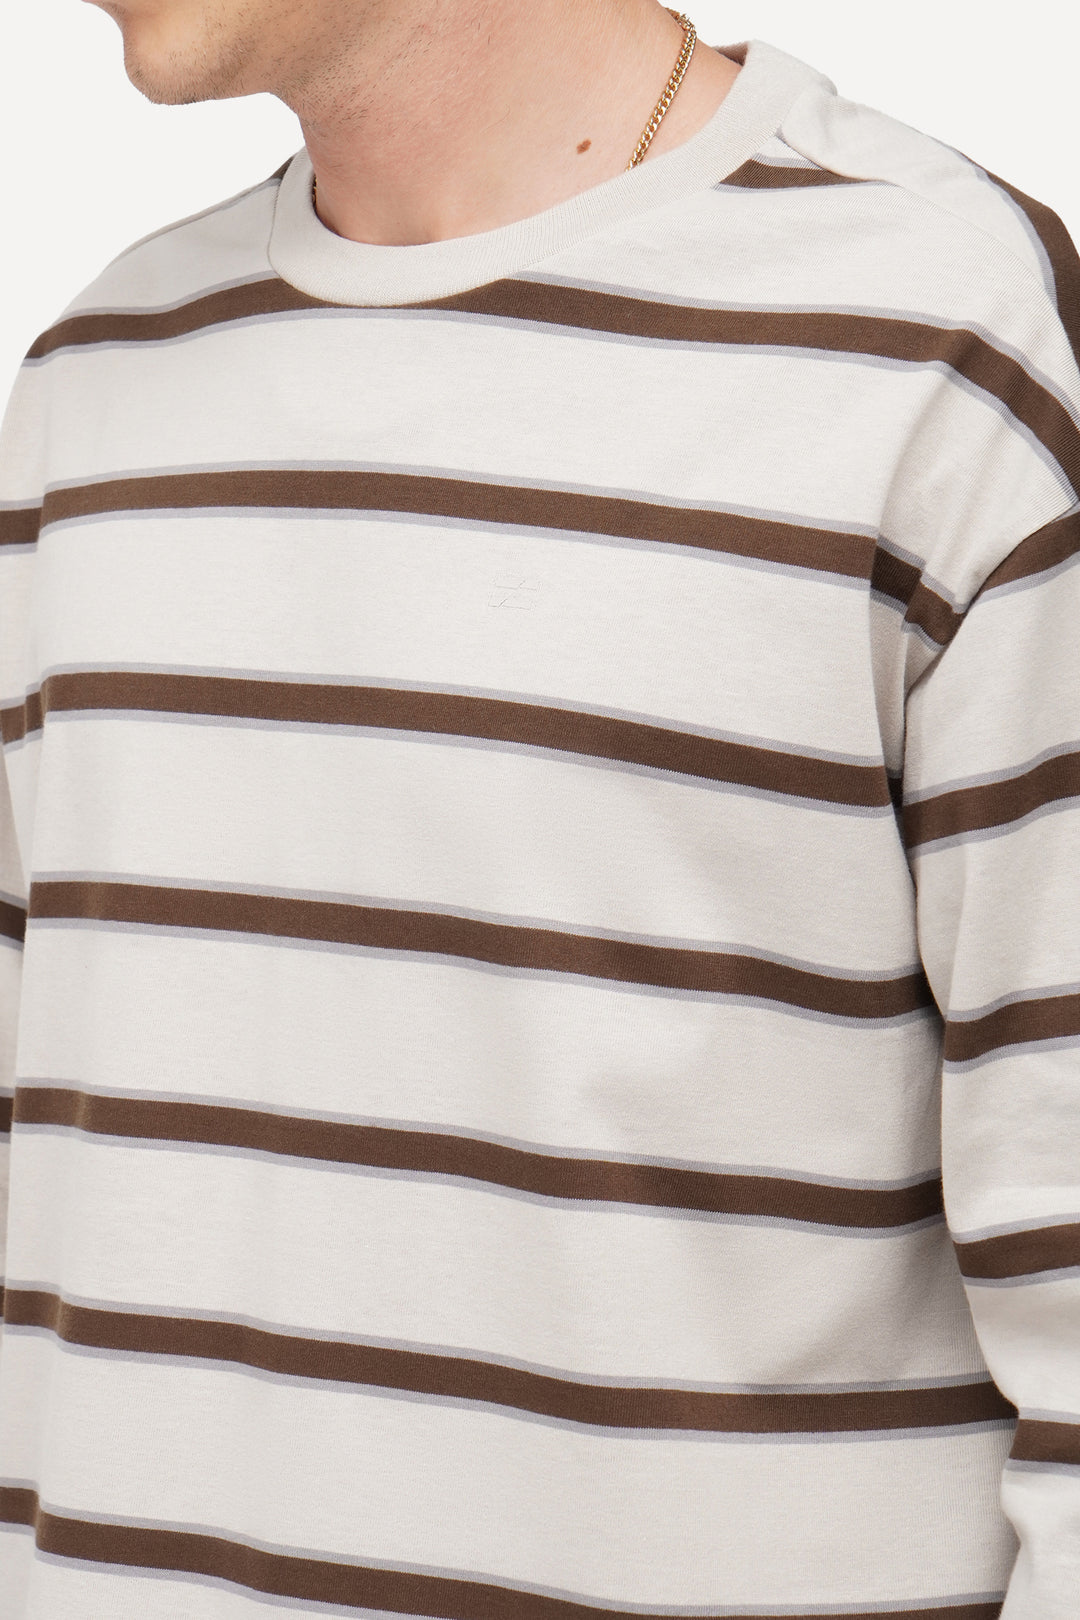 Unisex Striped Long Sleeves T-Shirt